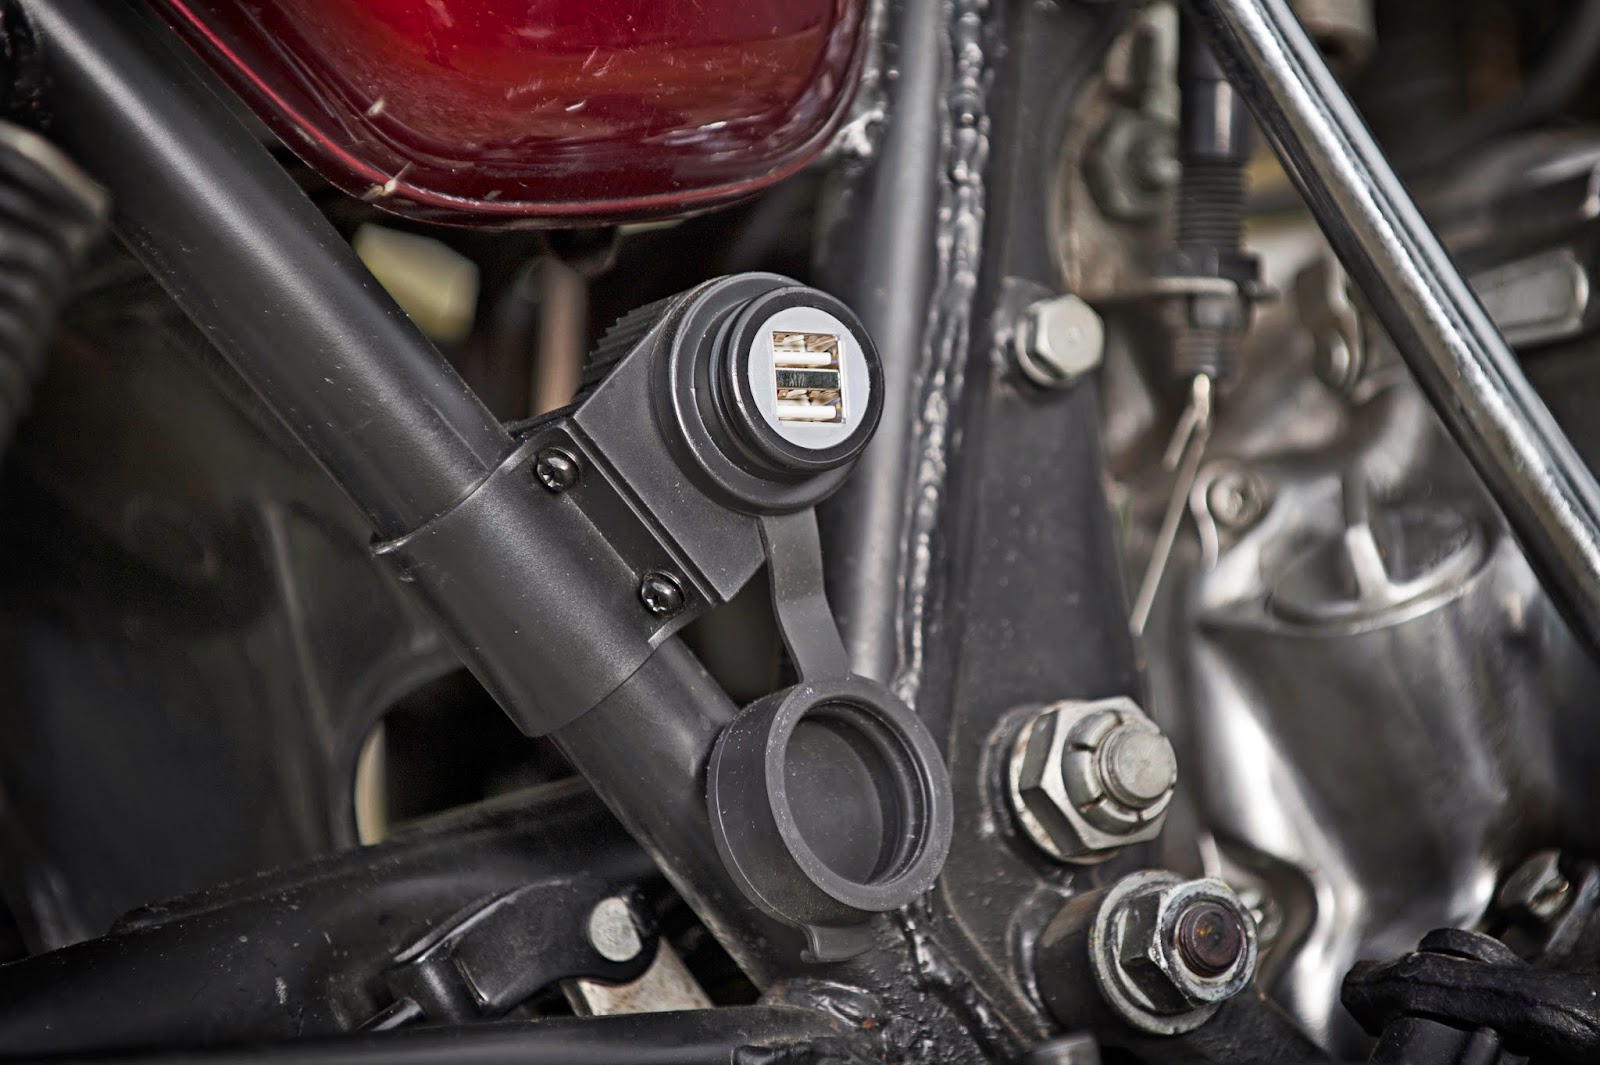 Honda CB550F USB Charger / Phone & GPS Charger